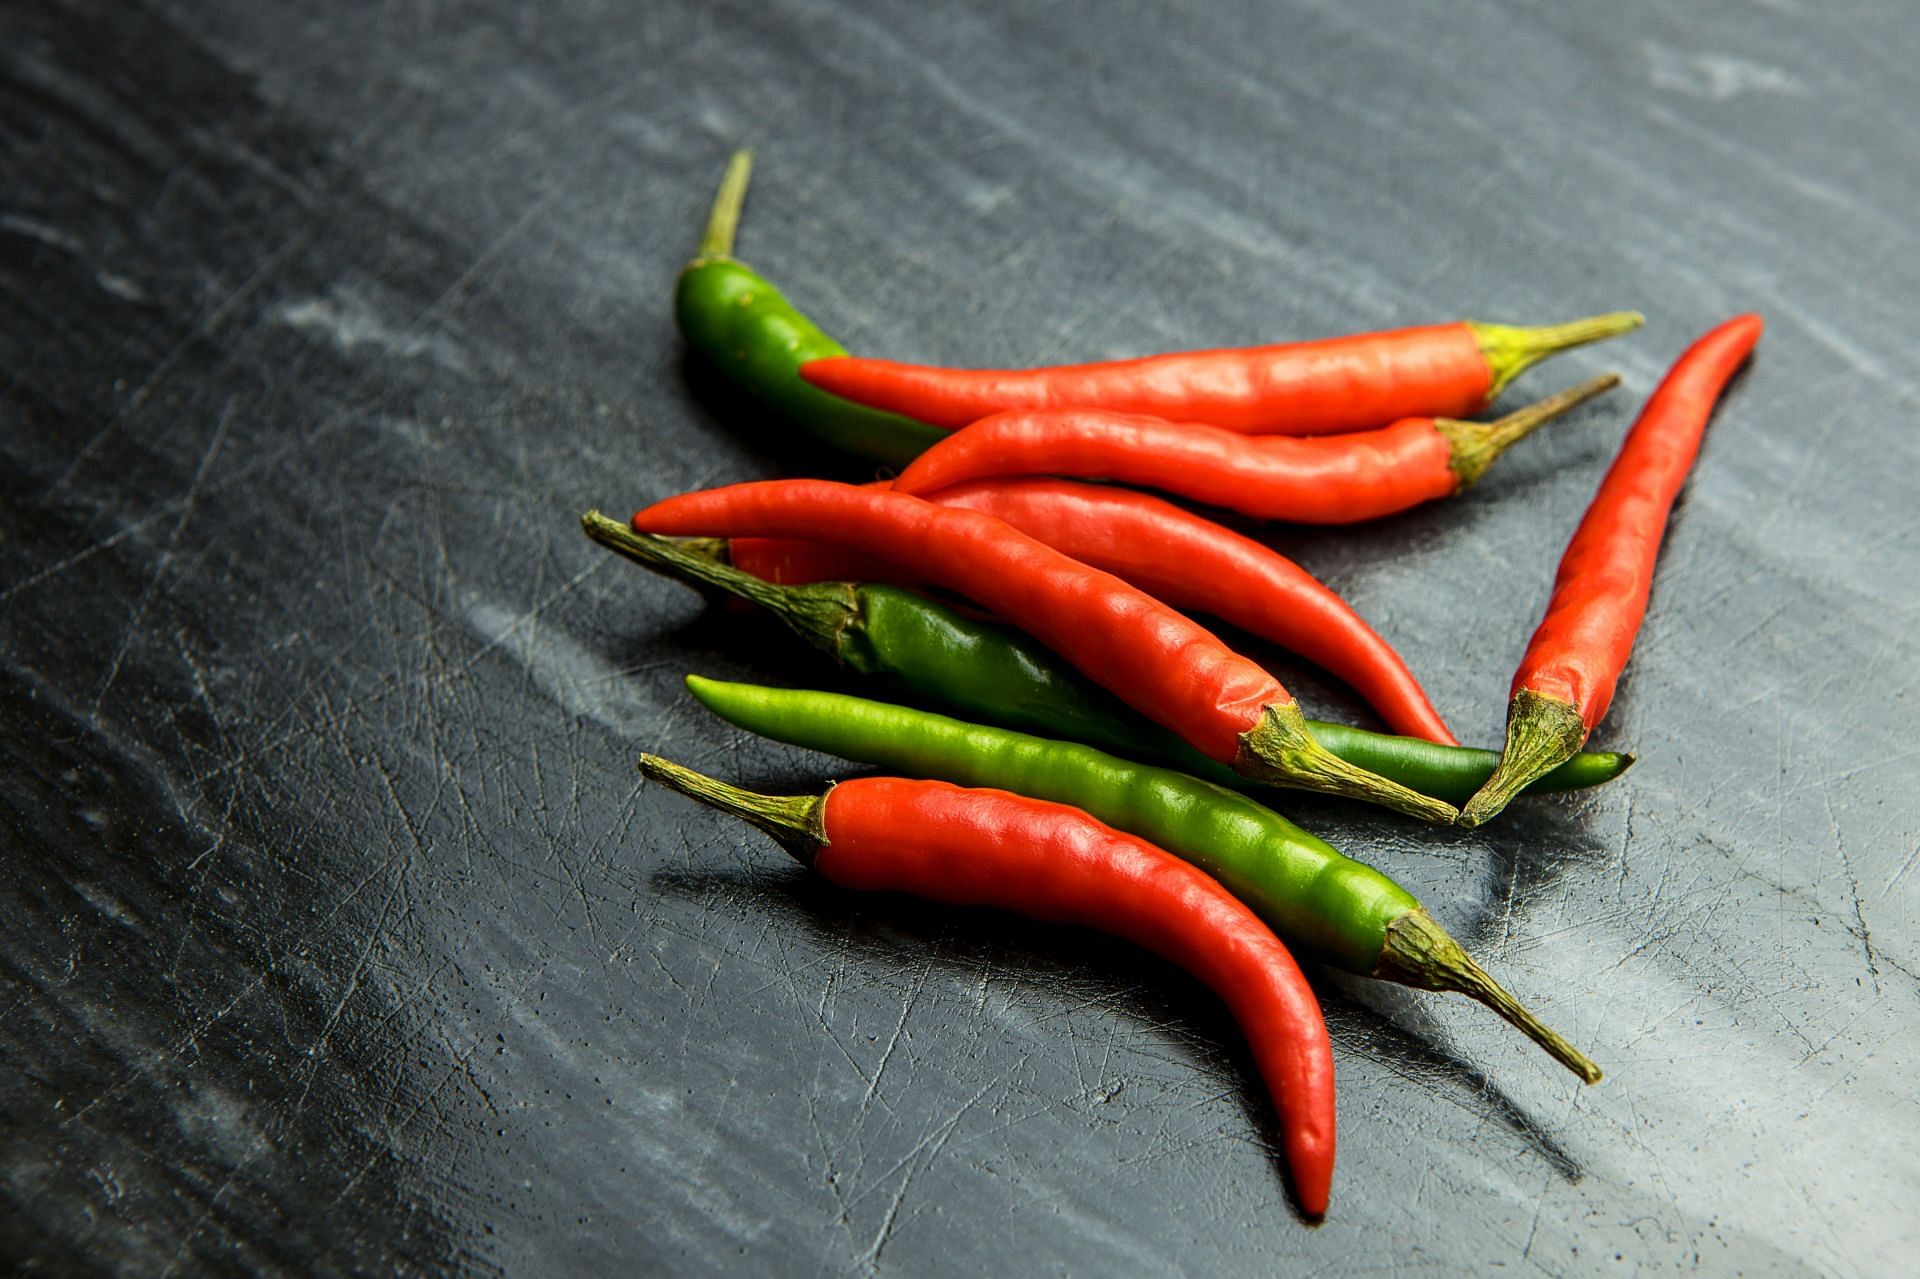 Too much cayenne pepper can be harmful. (Image via Unsplash/Tobjorn Helgesen)